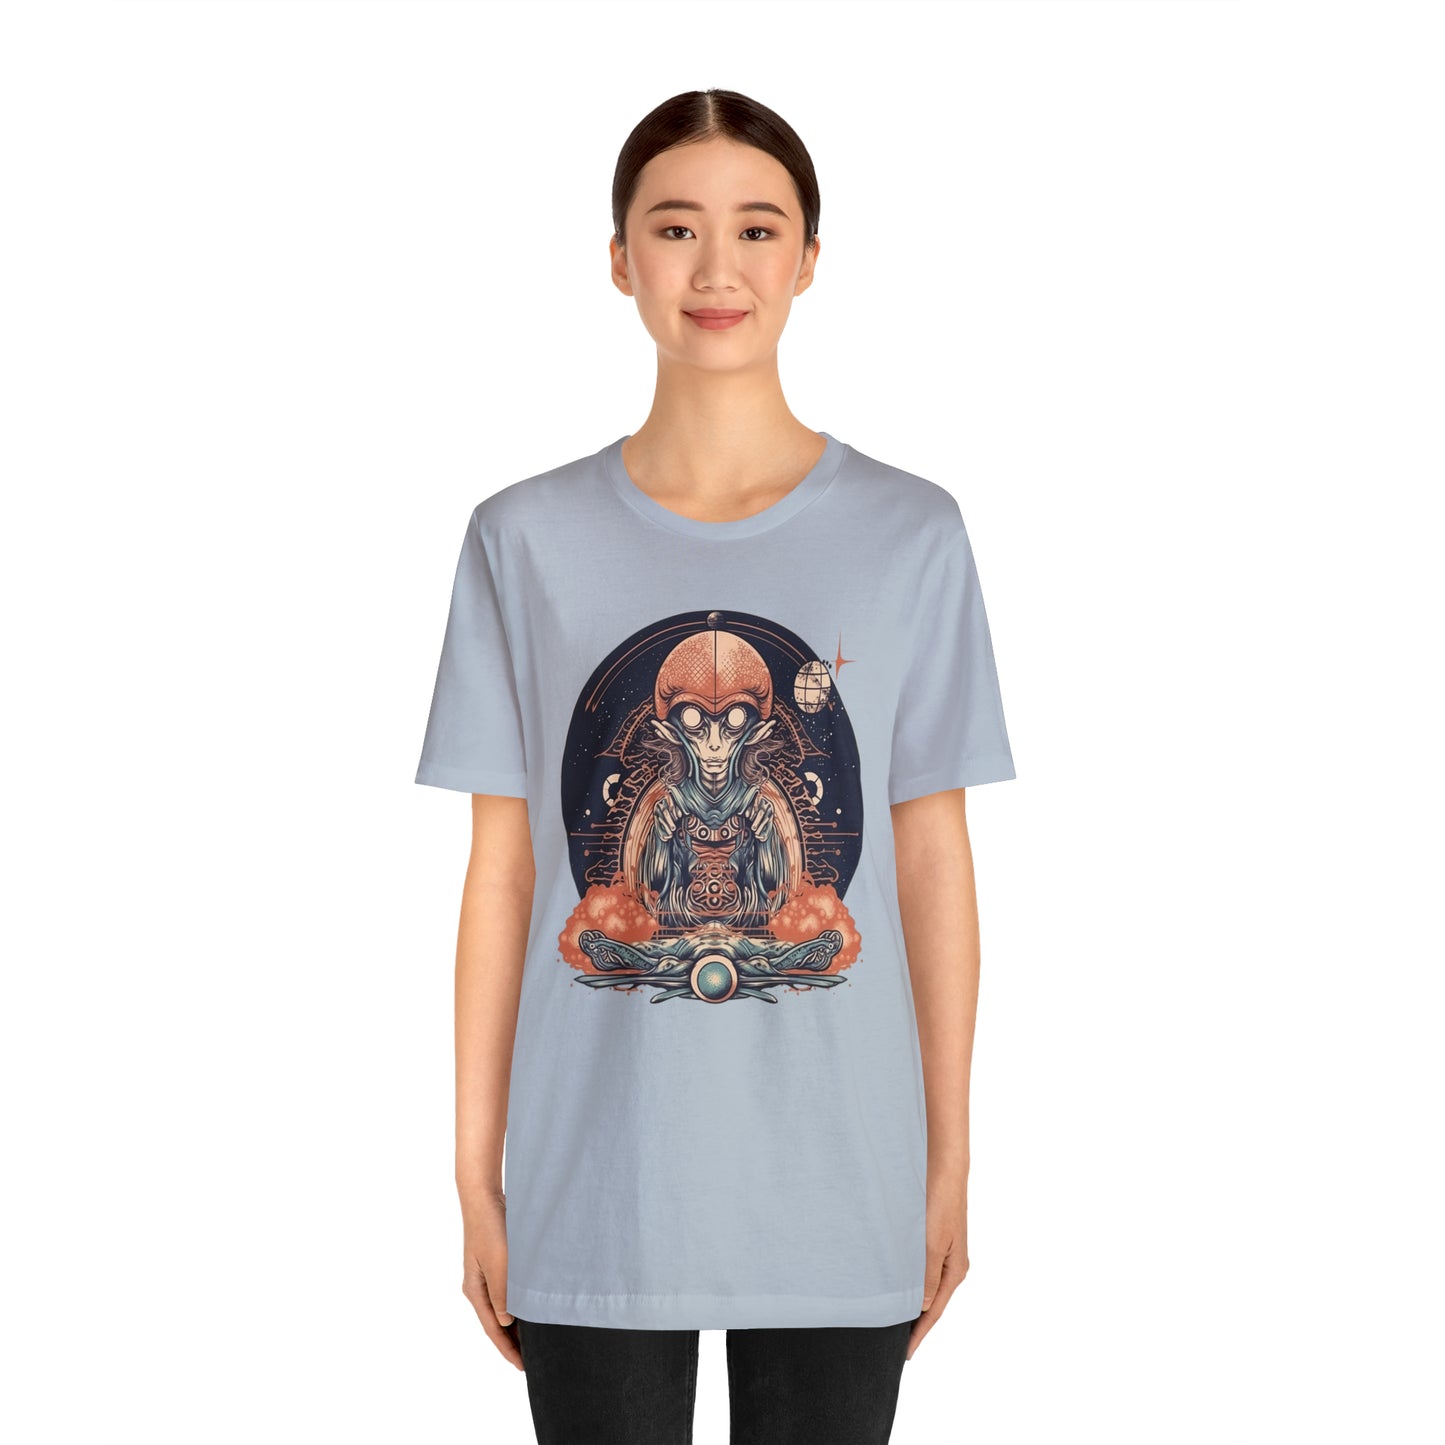 Alien Cosmic Galaxy T-Shirt | Explore Spiritual Awakening & Oneness